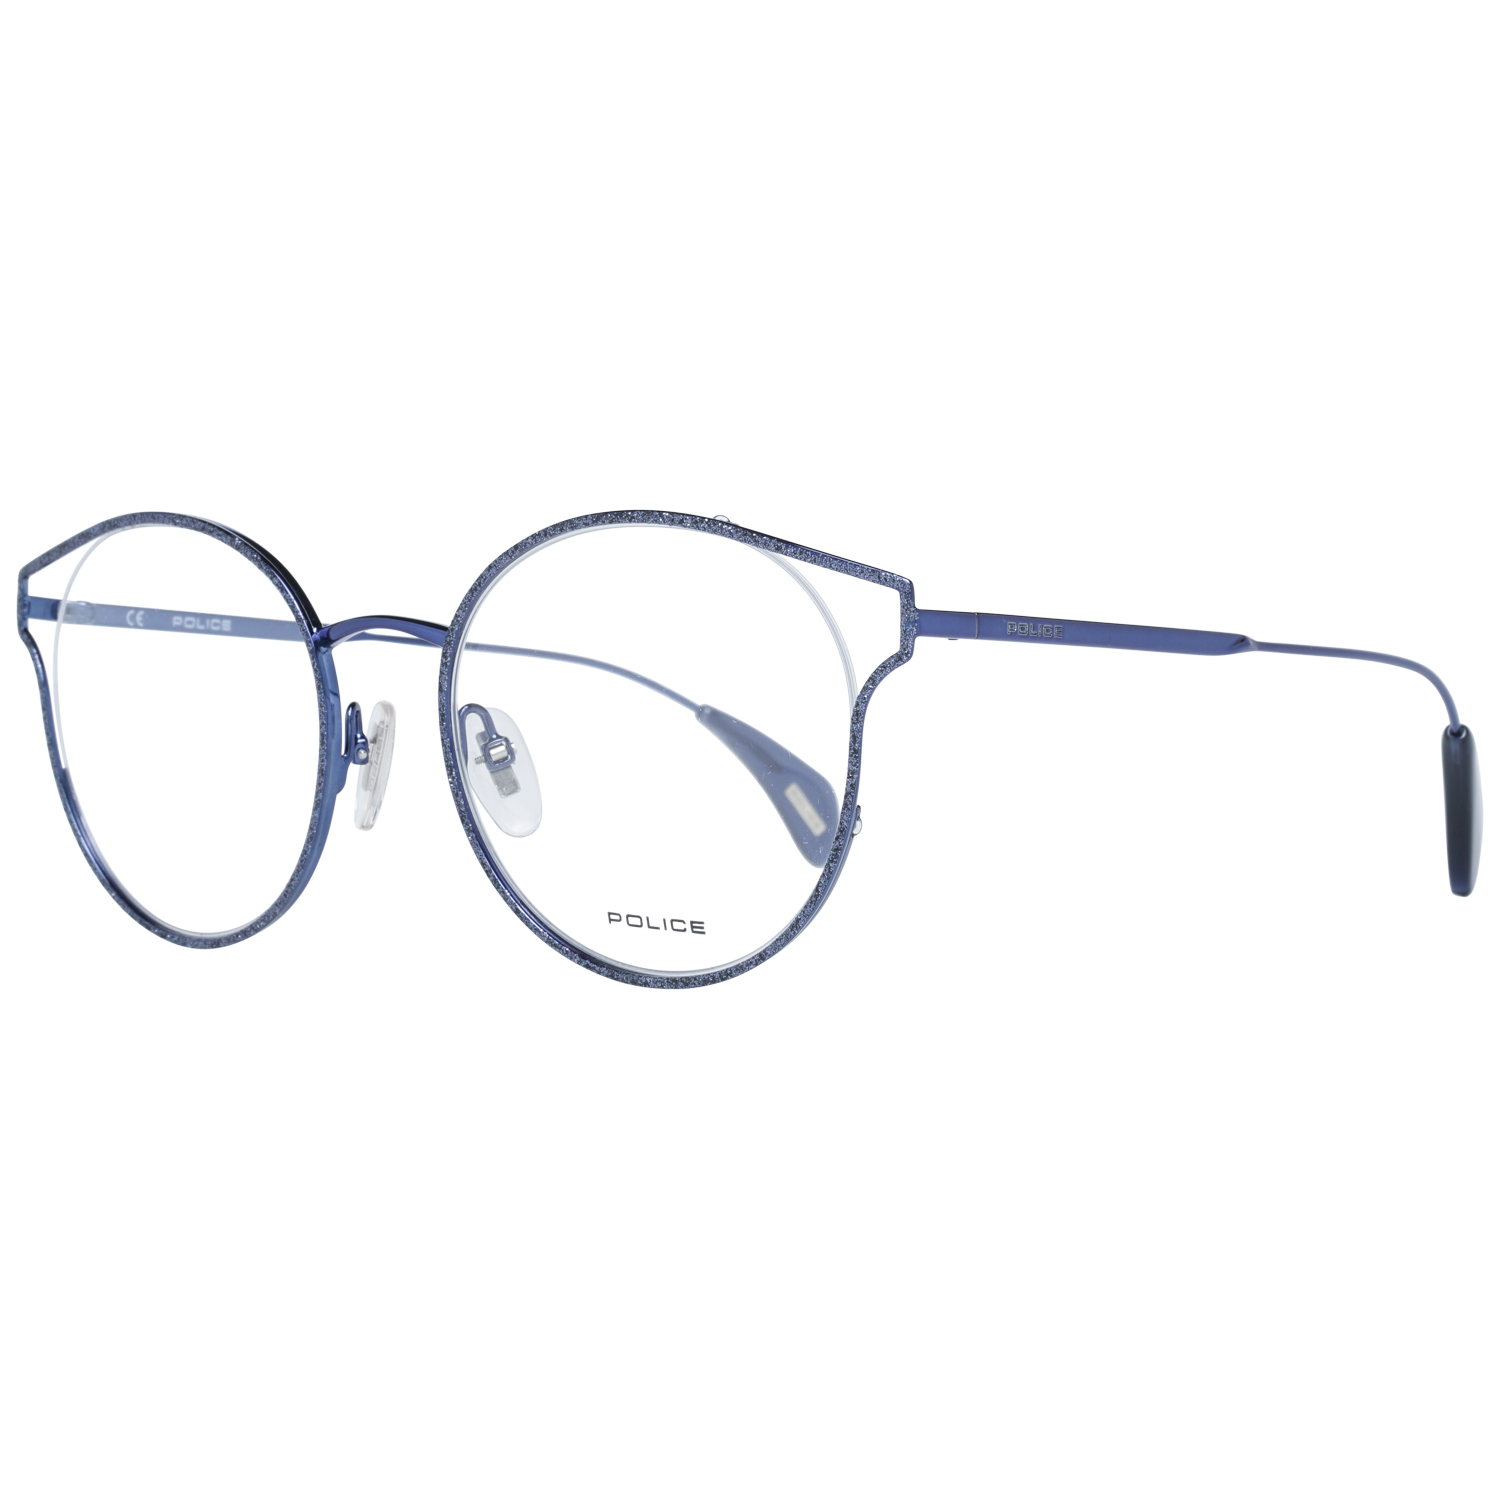 Police Frames Police Glasses Frames VPL926 0F54 50 Eyeglasses Eyewear UK USA Australia 